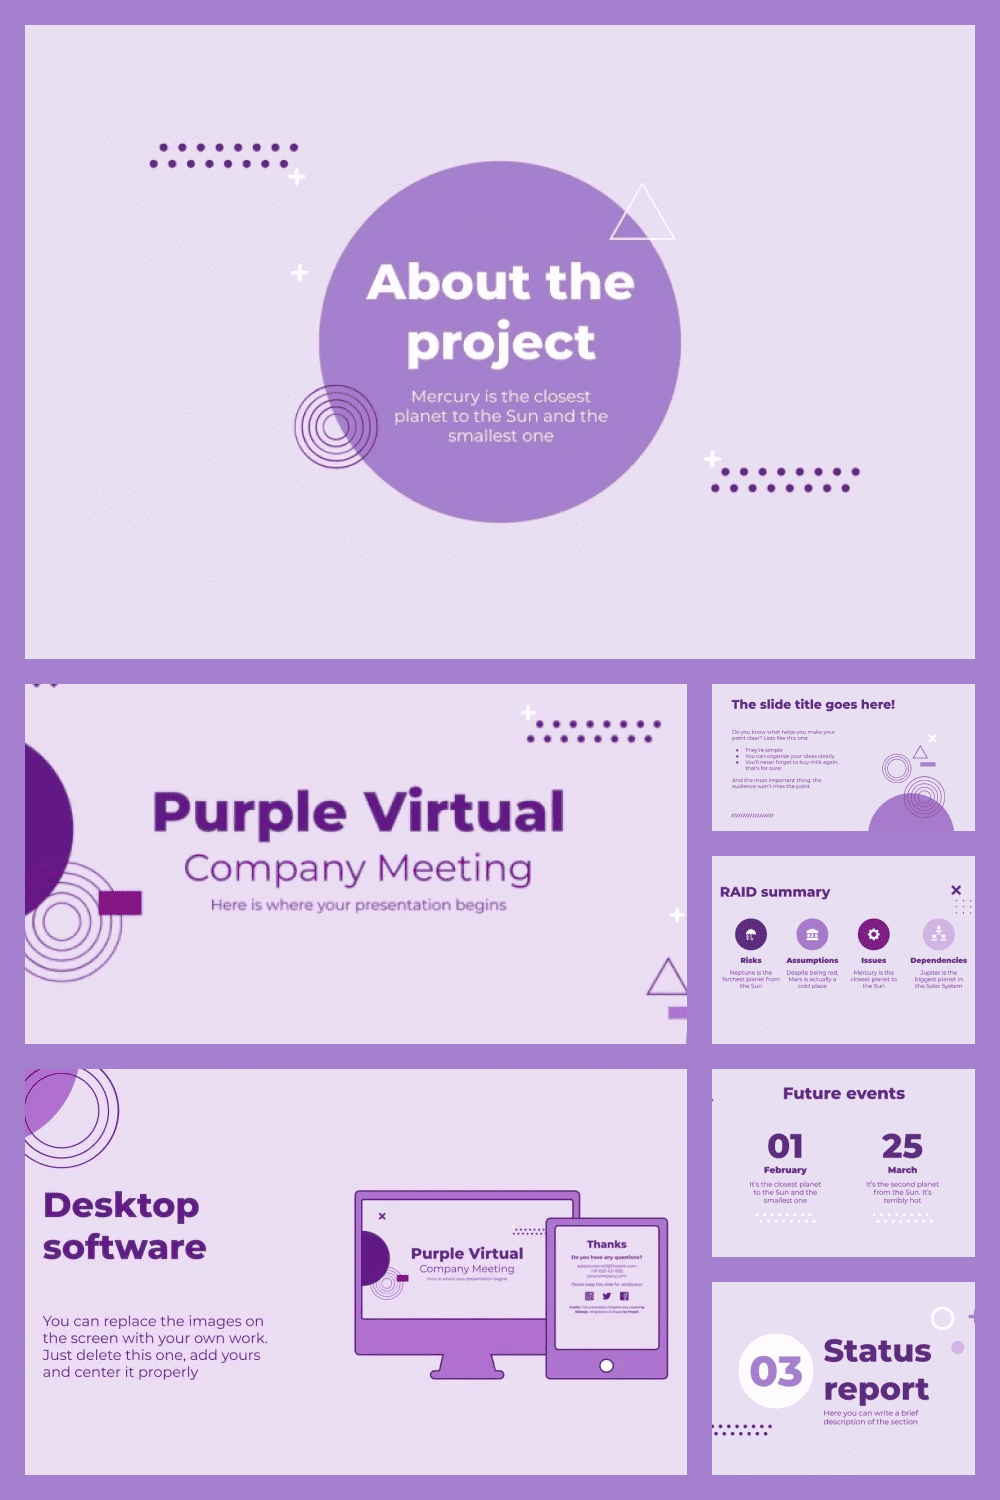 Purple virtual company meeting.